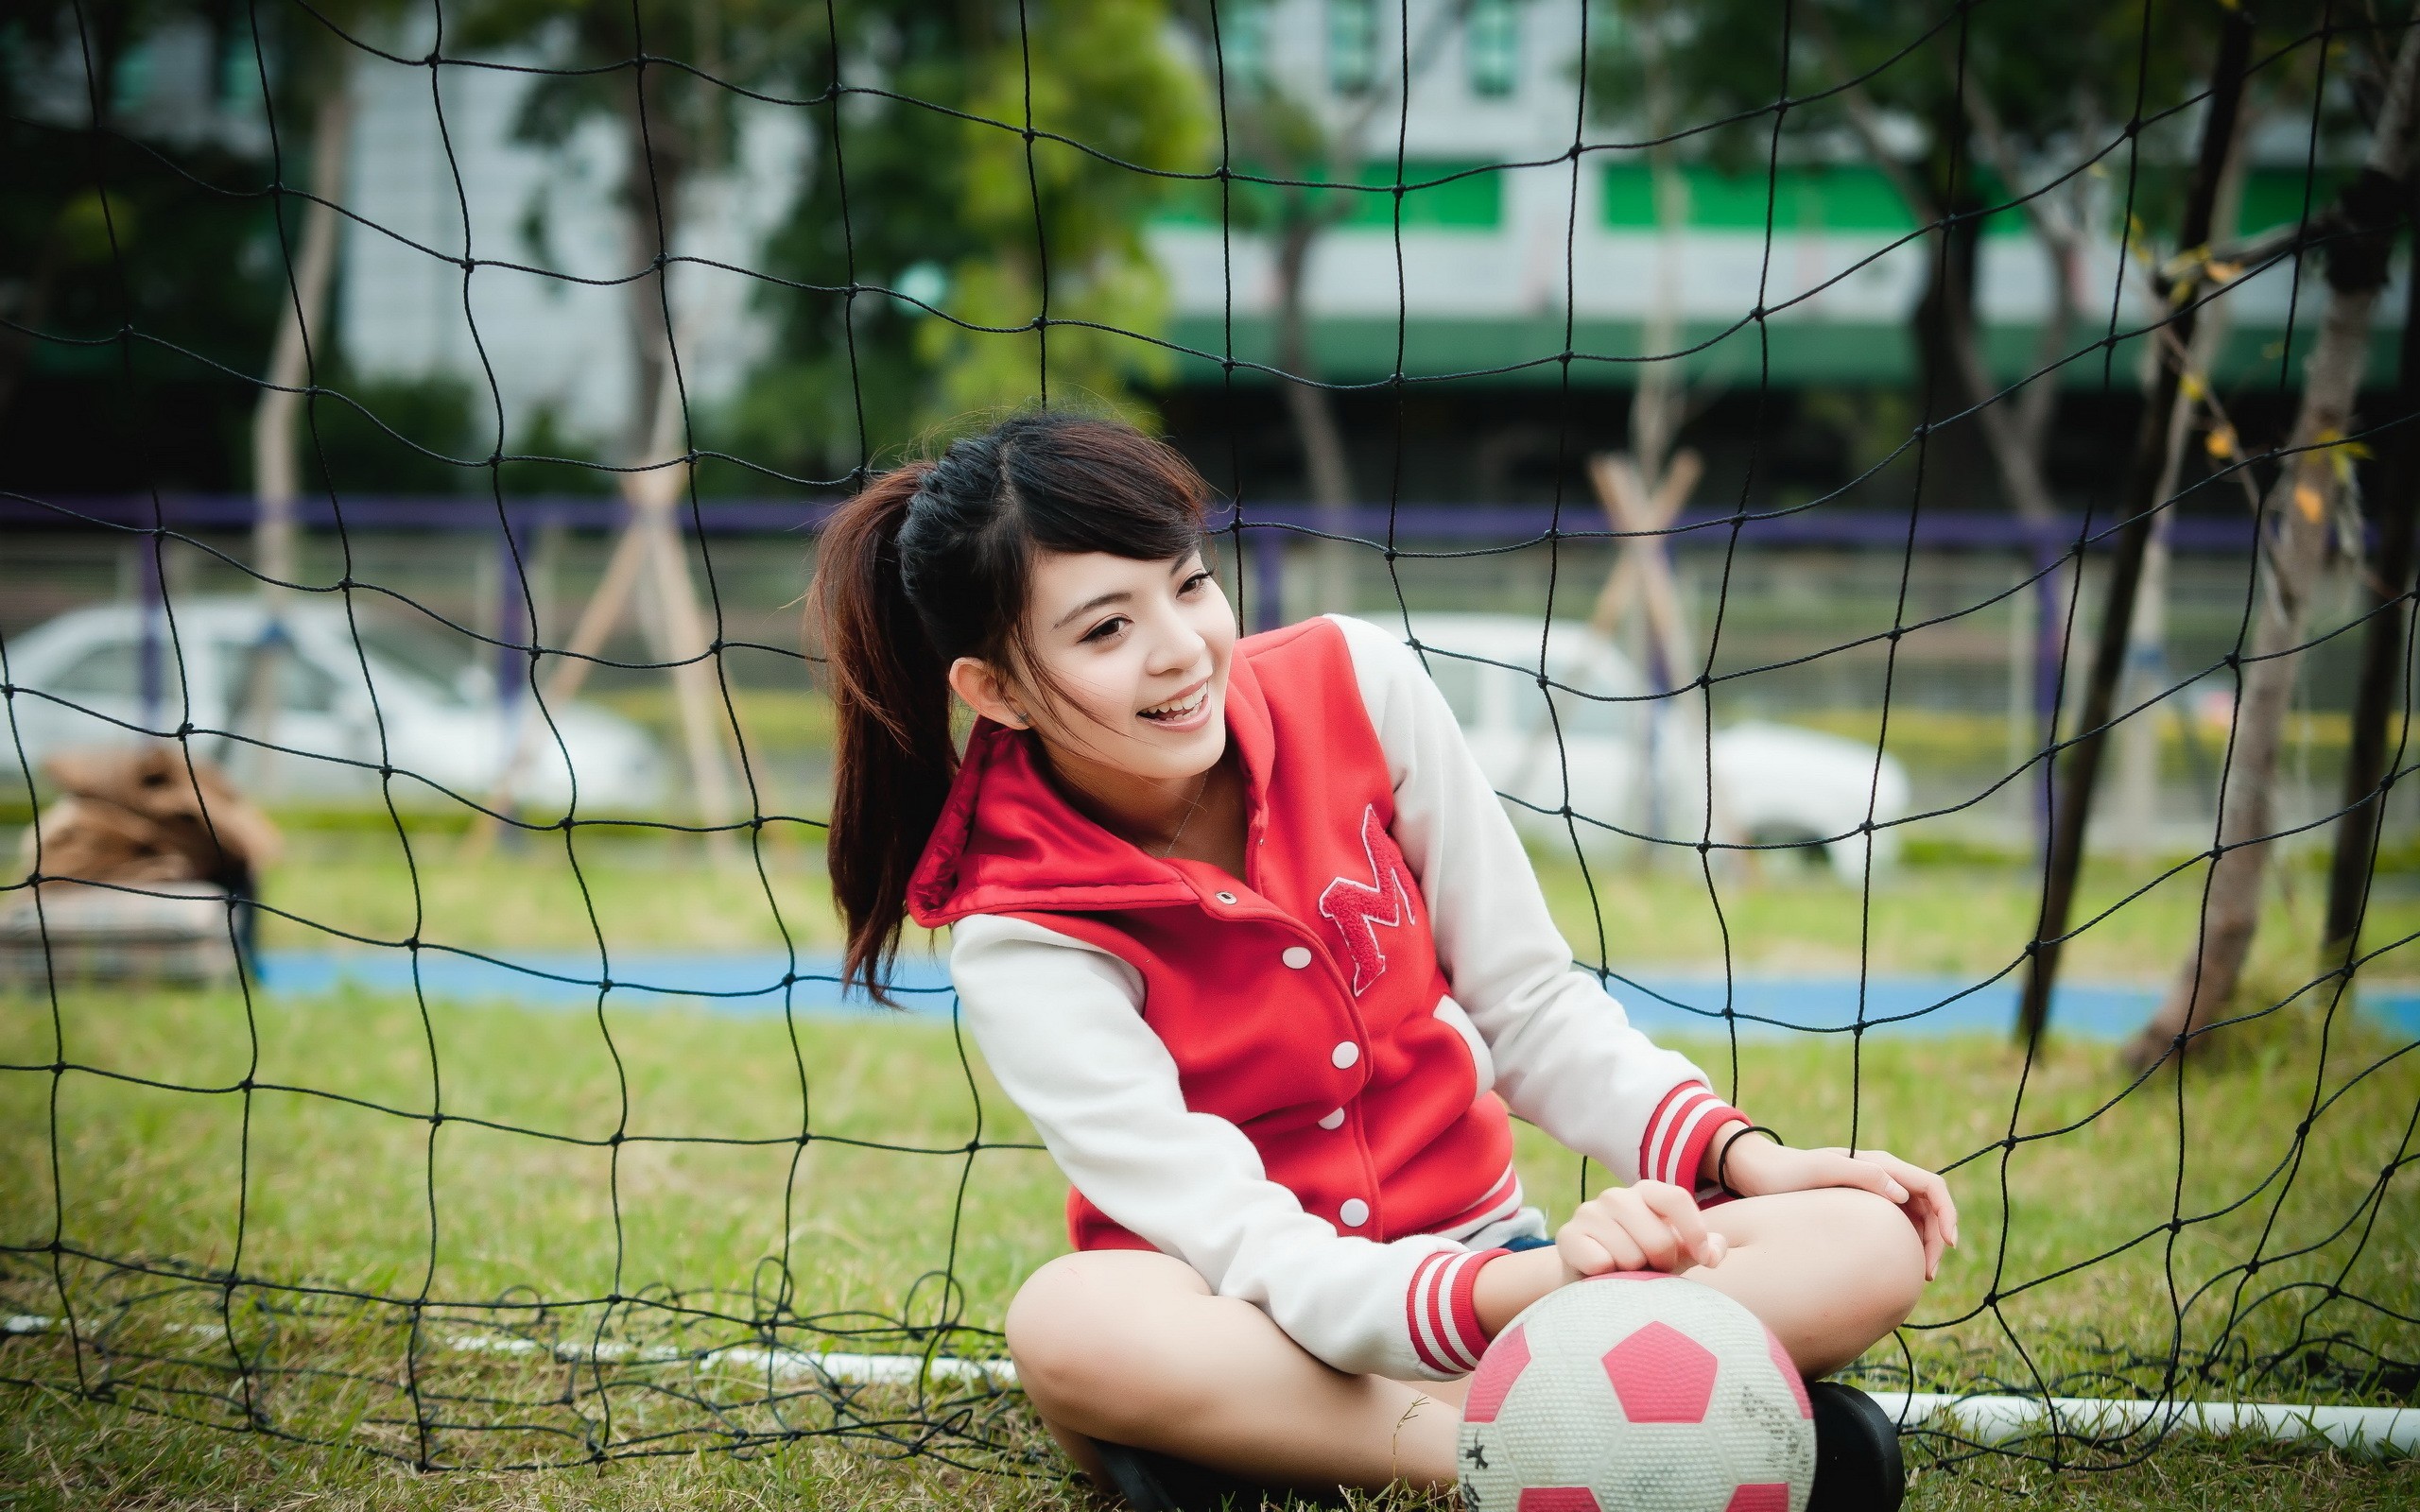 Women Model Brunette Long Hair Women Outdoors Asian Smiling Sitting Sports Jerseys Soccer Pitches Gr 2560x1600